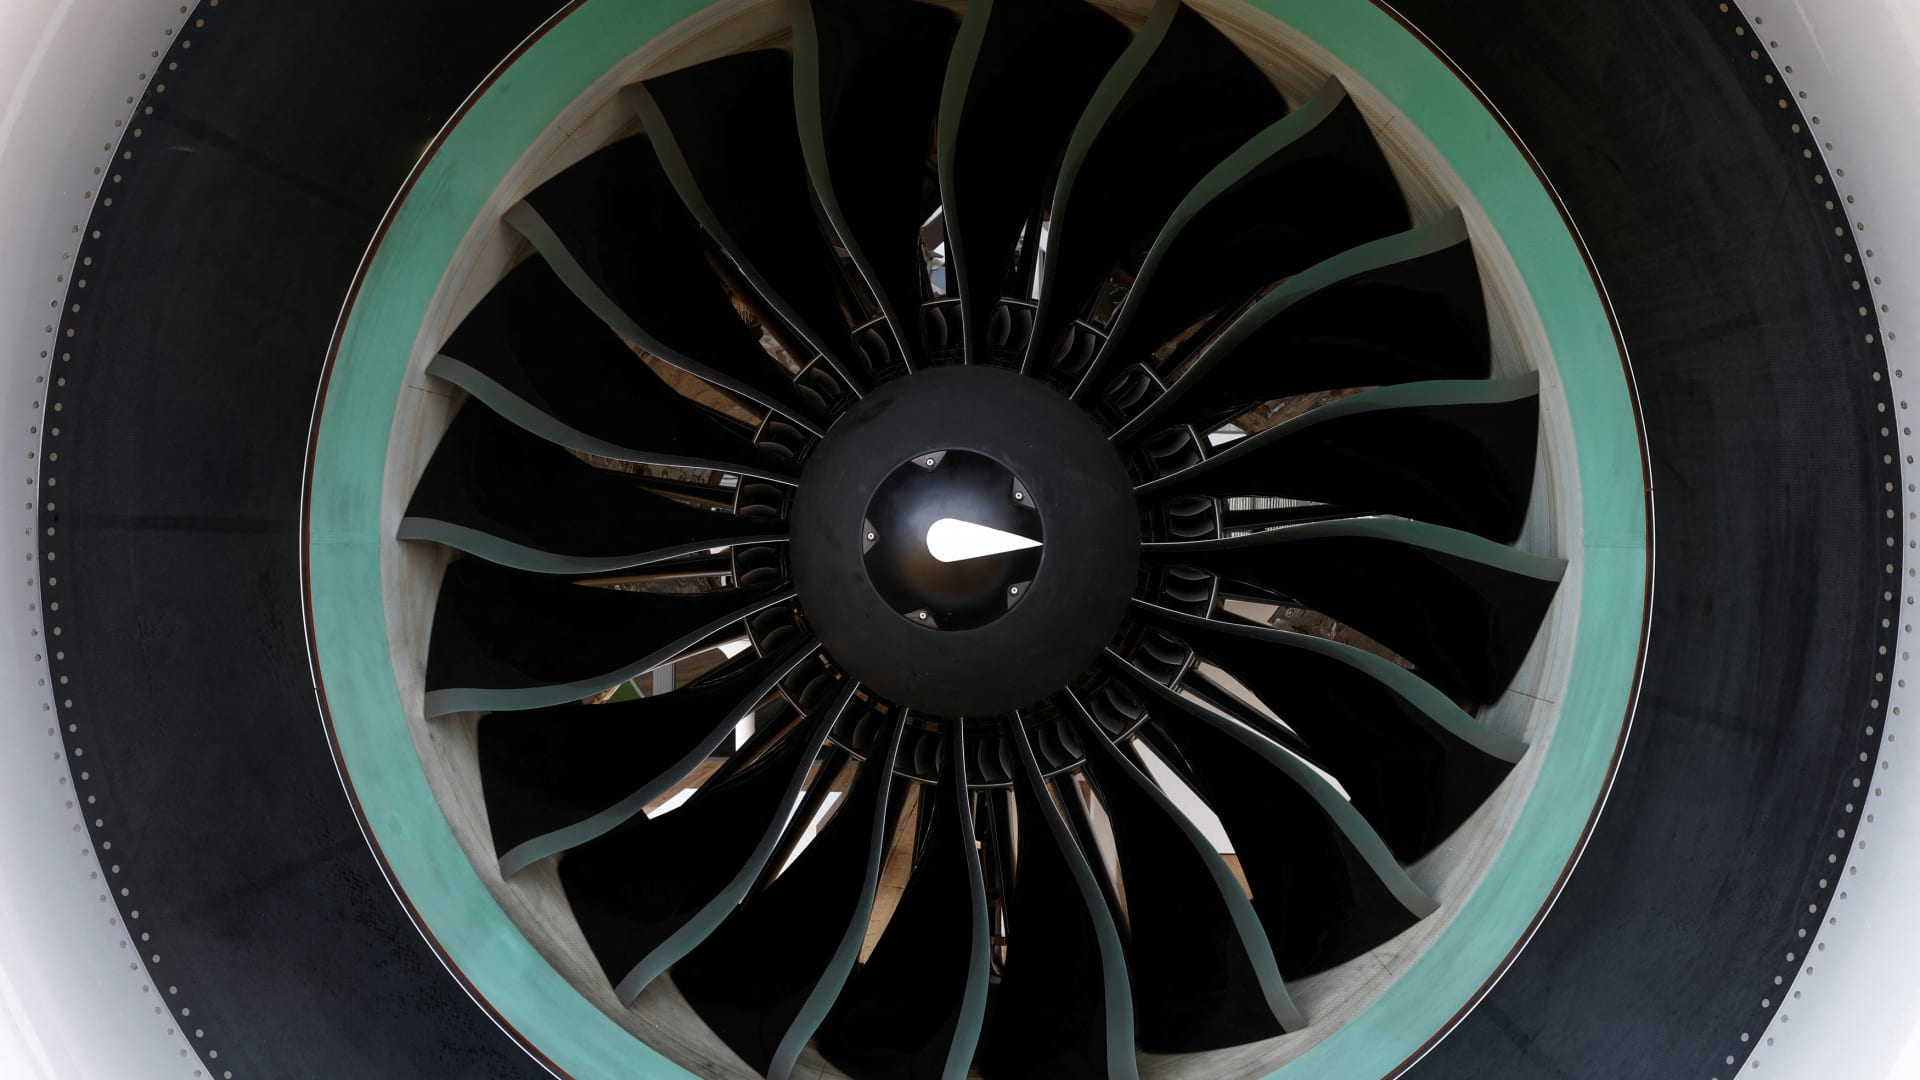 RTX to take $3 billion charge on Pratt & Whitney engine problem